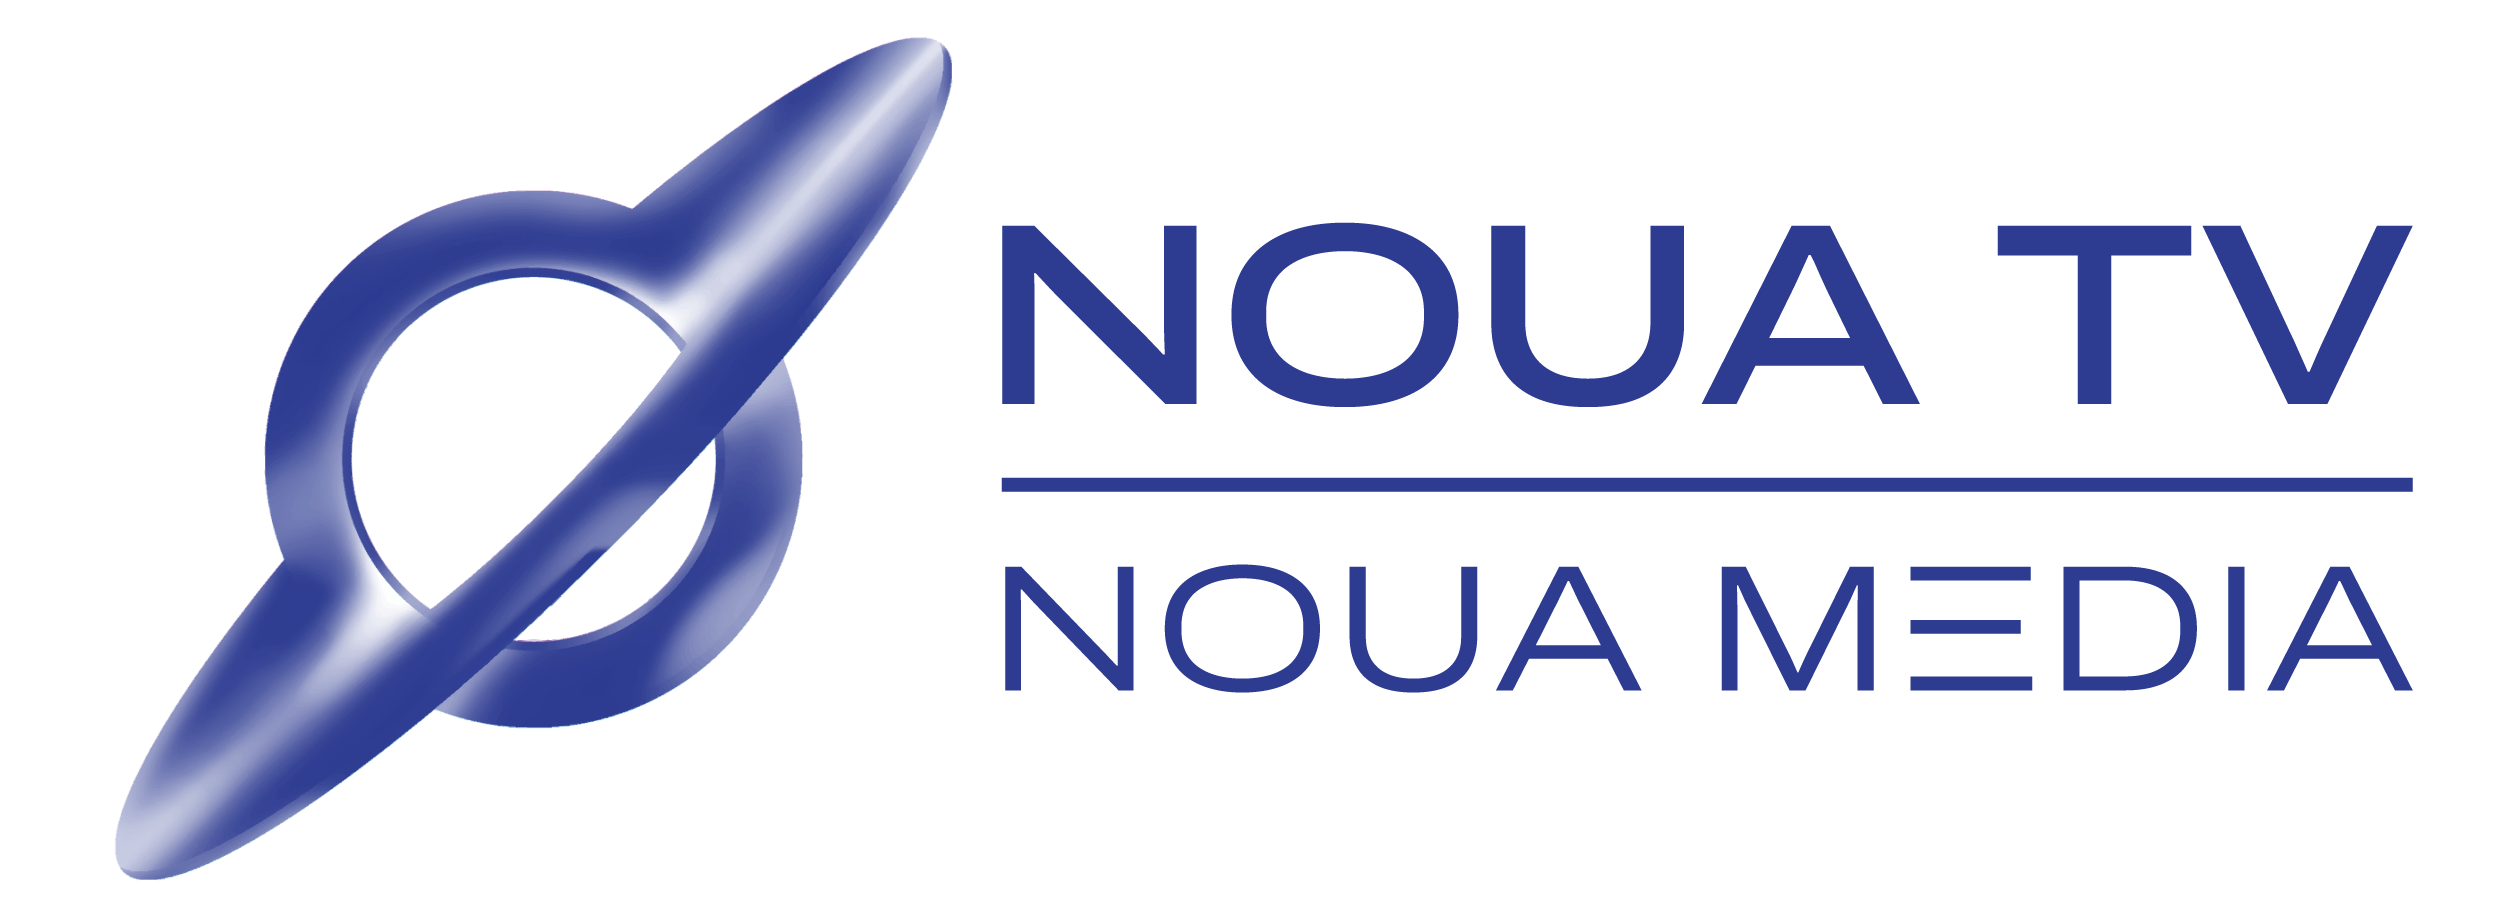 NOUA MEDIA | NOUA NEWS